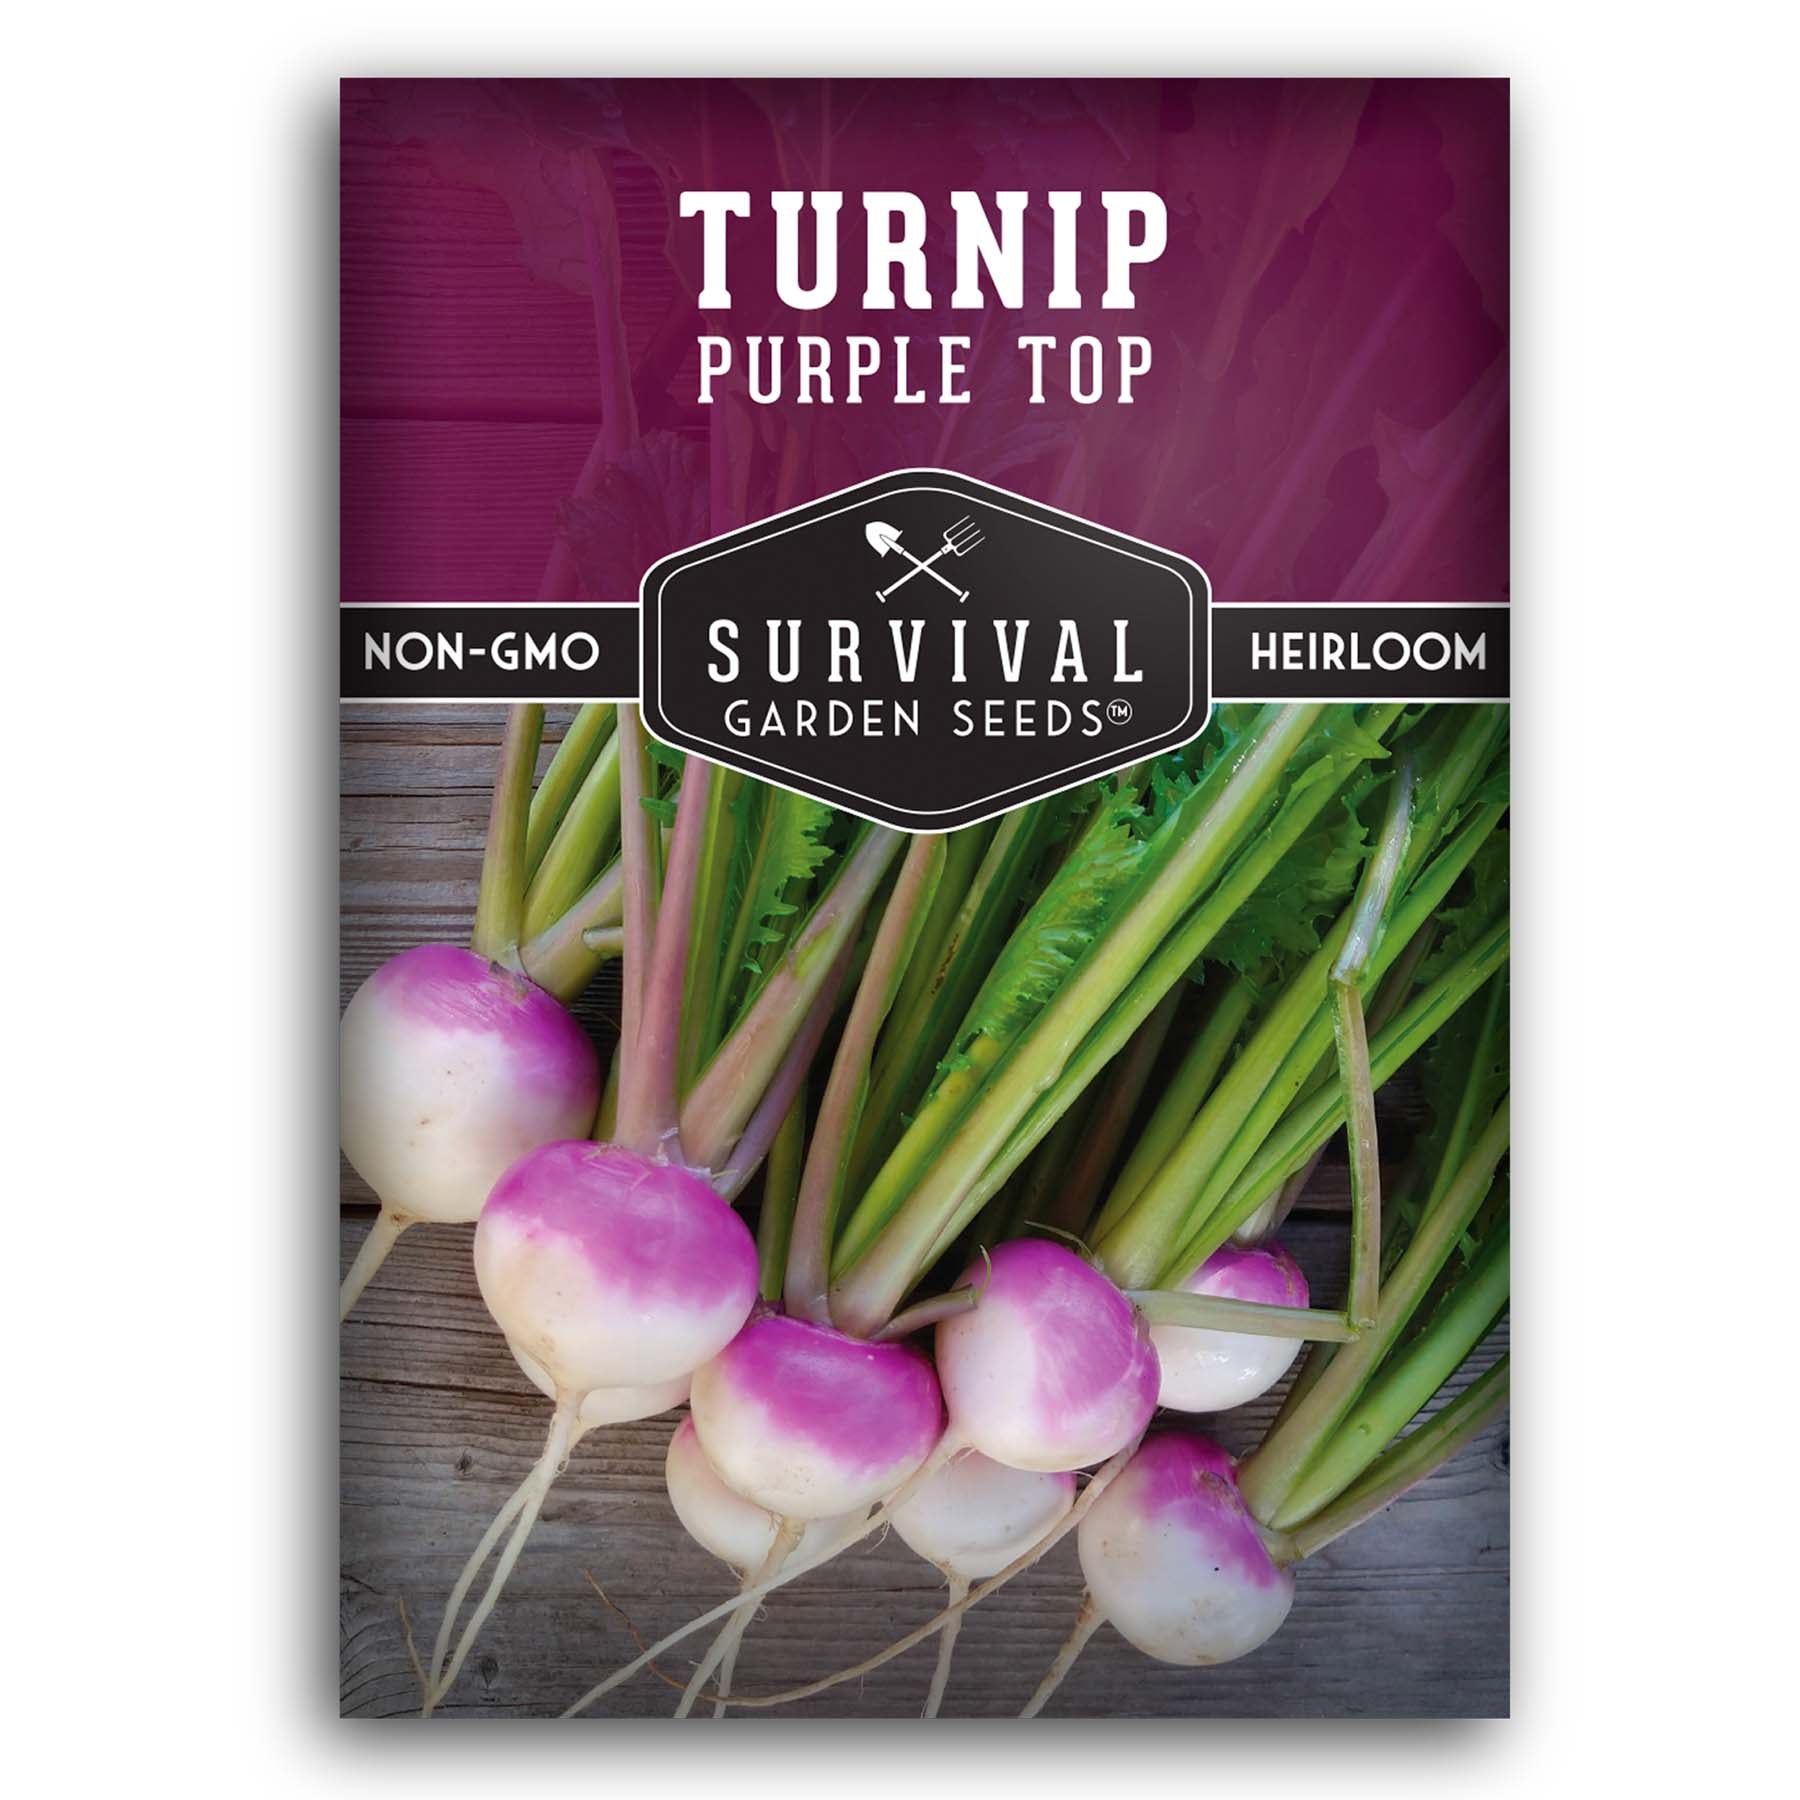 Purple top turnip seeds for planting